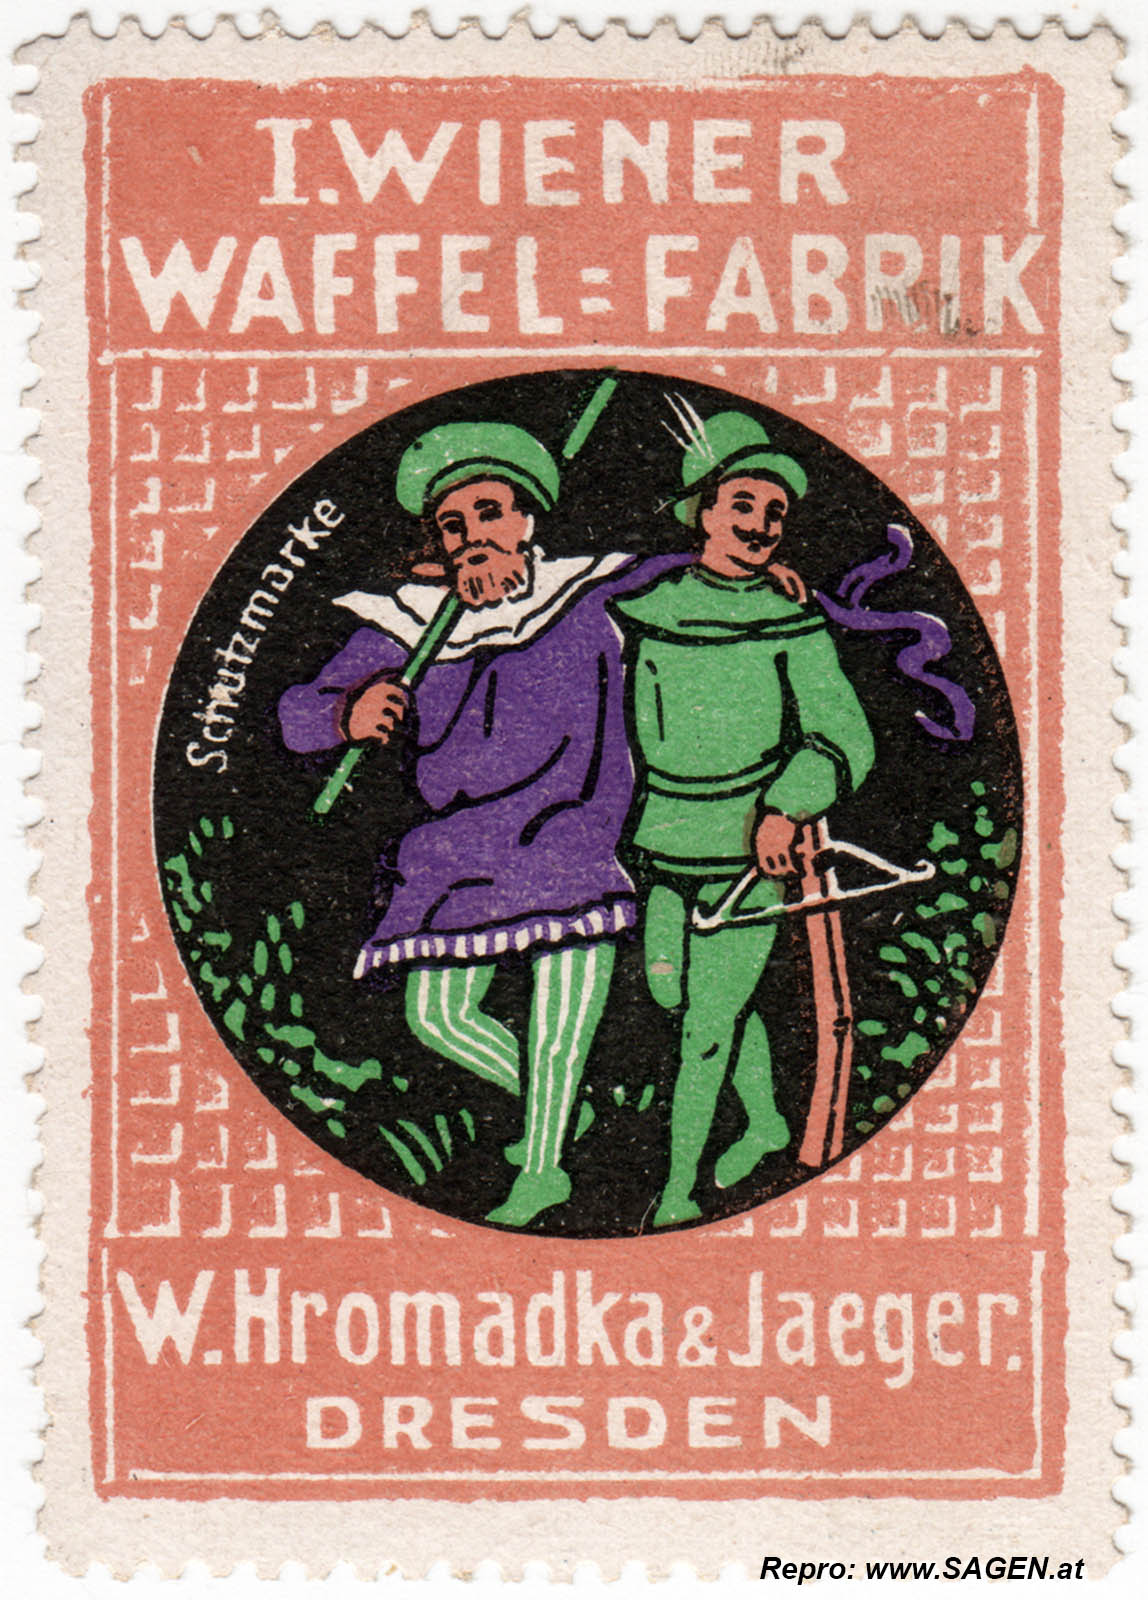 Reklamemarke I. Wiener Waffel-Fabrik Hromadka & Jaeger